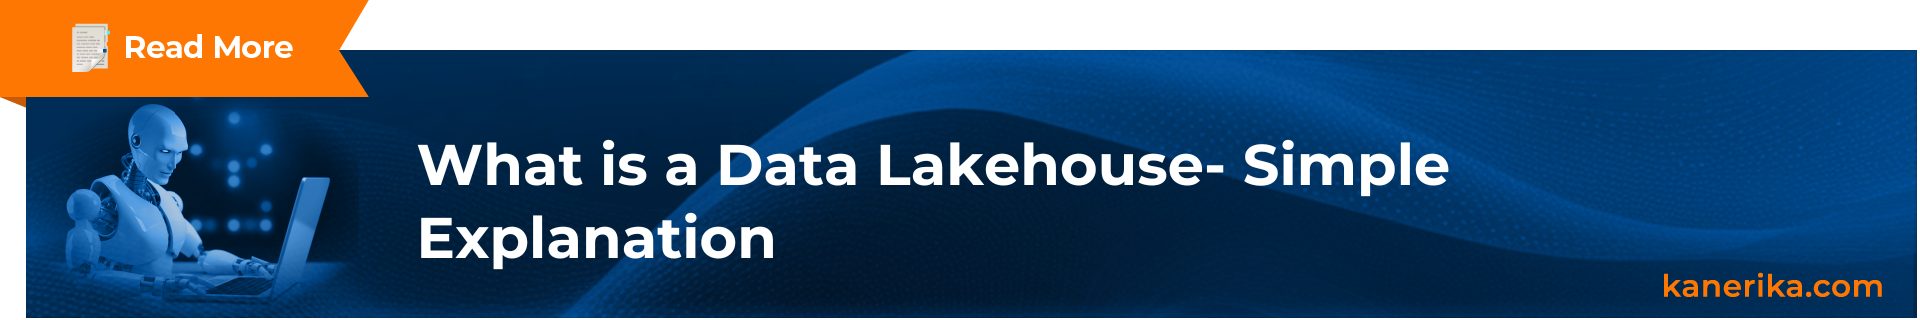 Read More (3)- Data Lakehouse